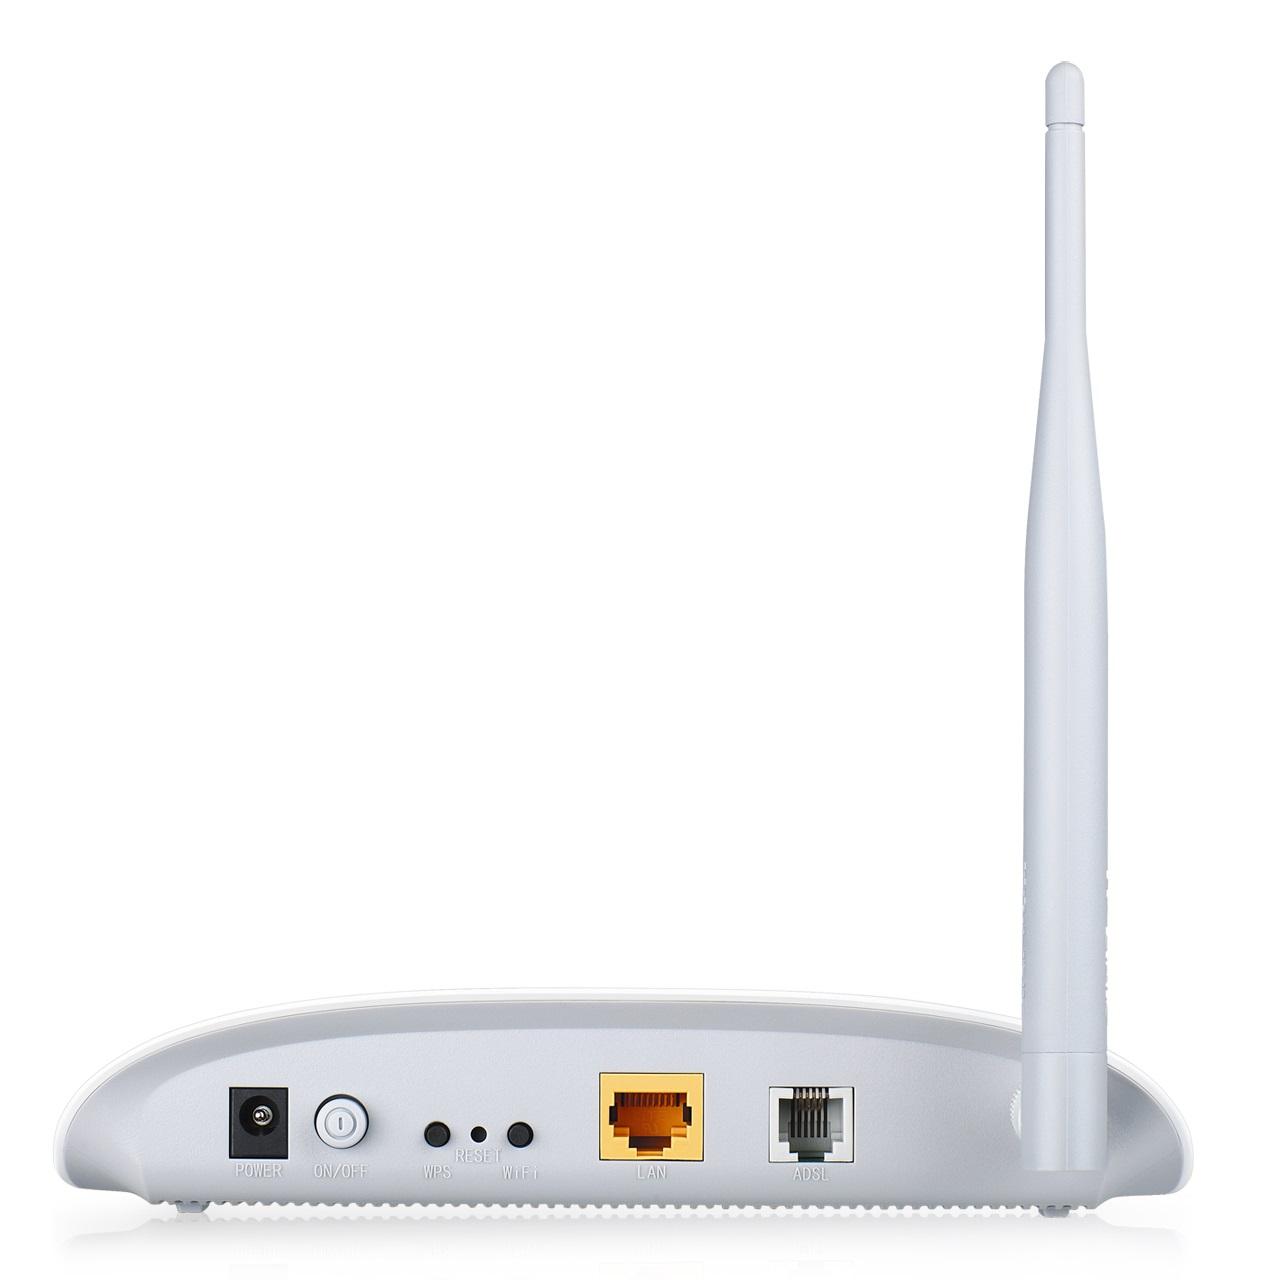 Modem Router TP-Link TD-W8151N - ADSL2+ N150 Wireless